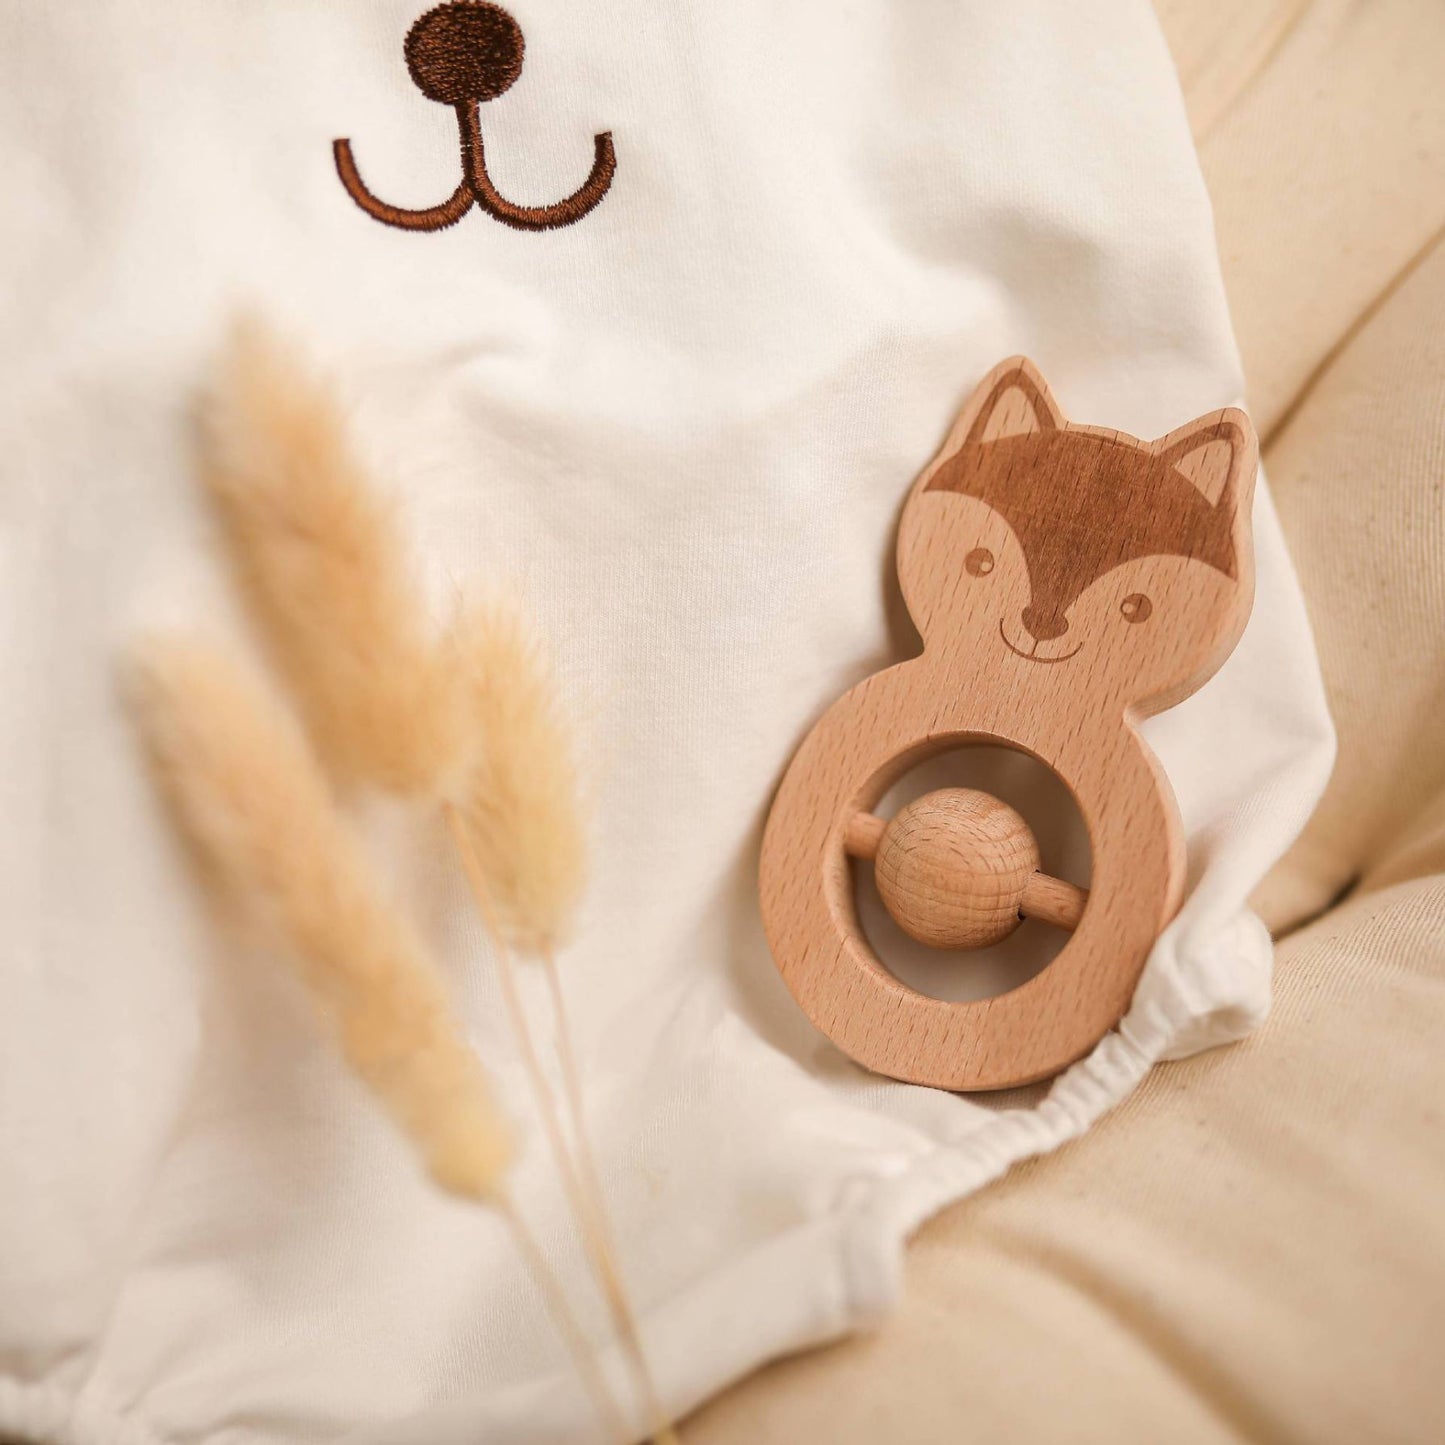 Wooden Fox, Koala Round Rattle, Teether Perfect baby gift